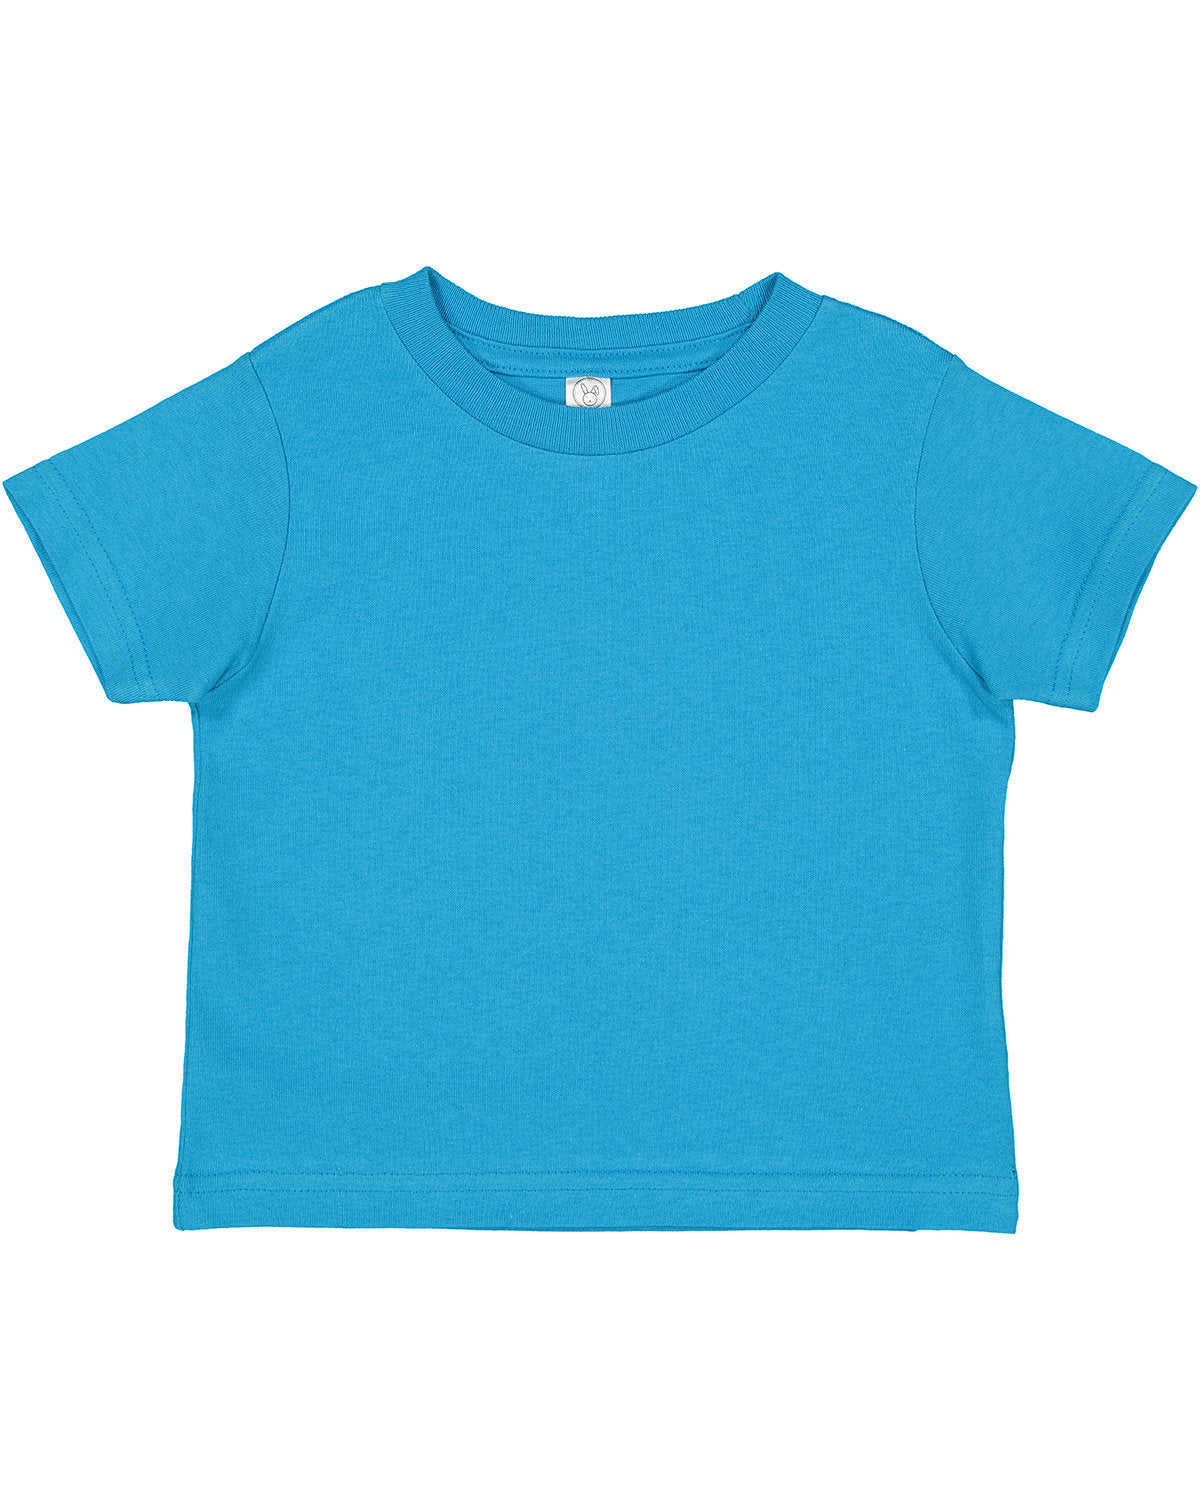 Rabbit Skins Toddler Cotton Jersey T-Shirt 3T / Turquoise